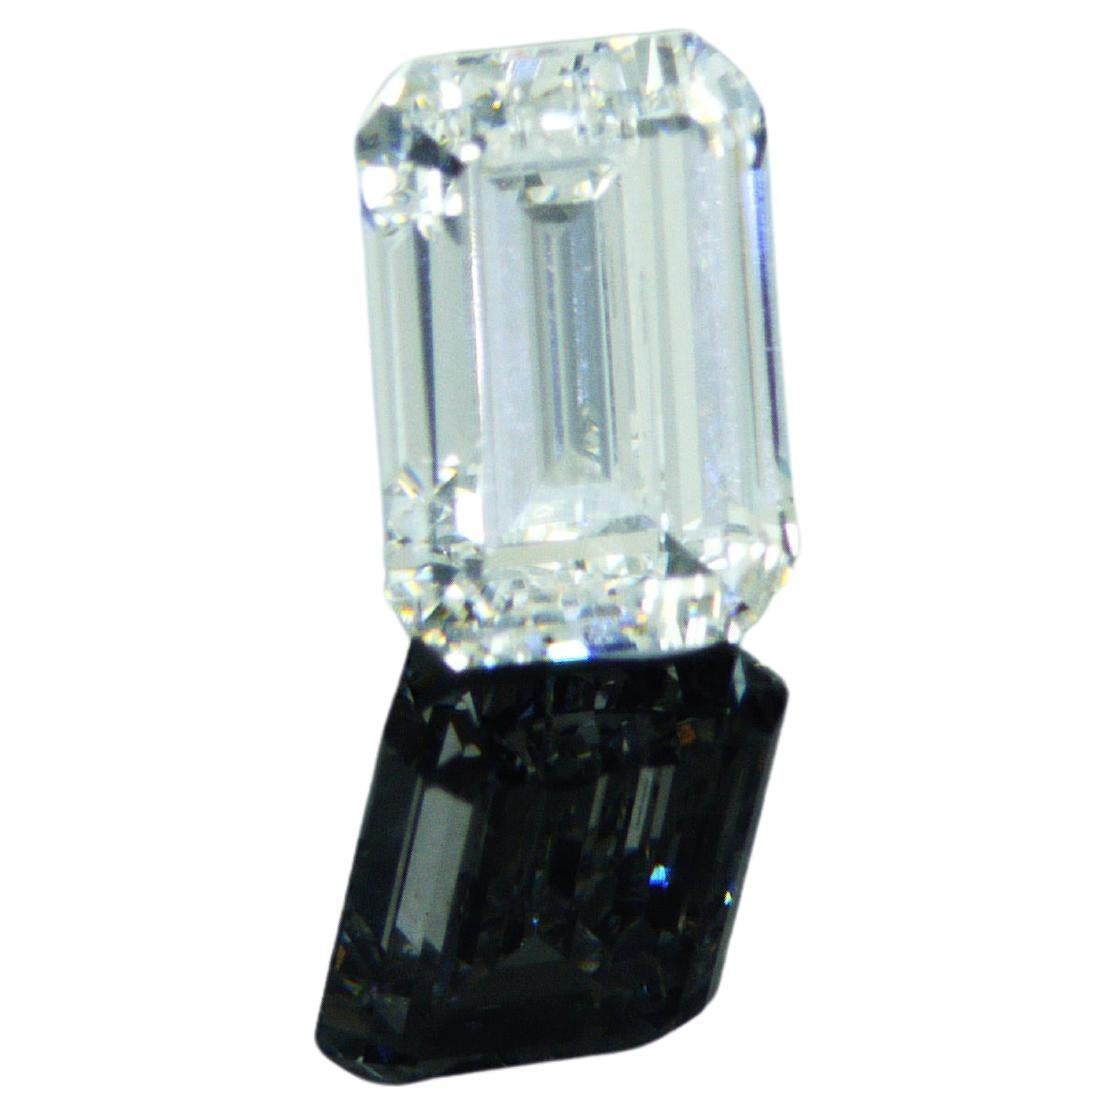 HRDAntwerp certified 0.93 carat Emerald Shape Natural Diamond E Loop Clean (IF) For Sale